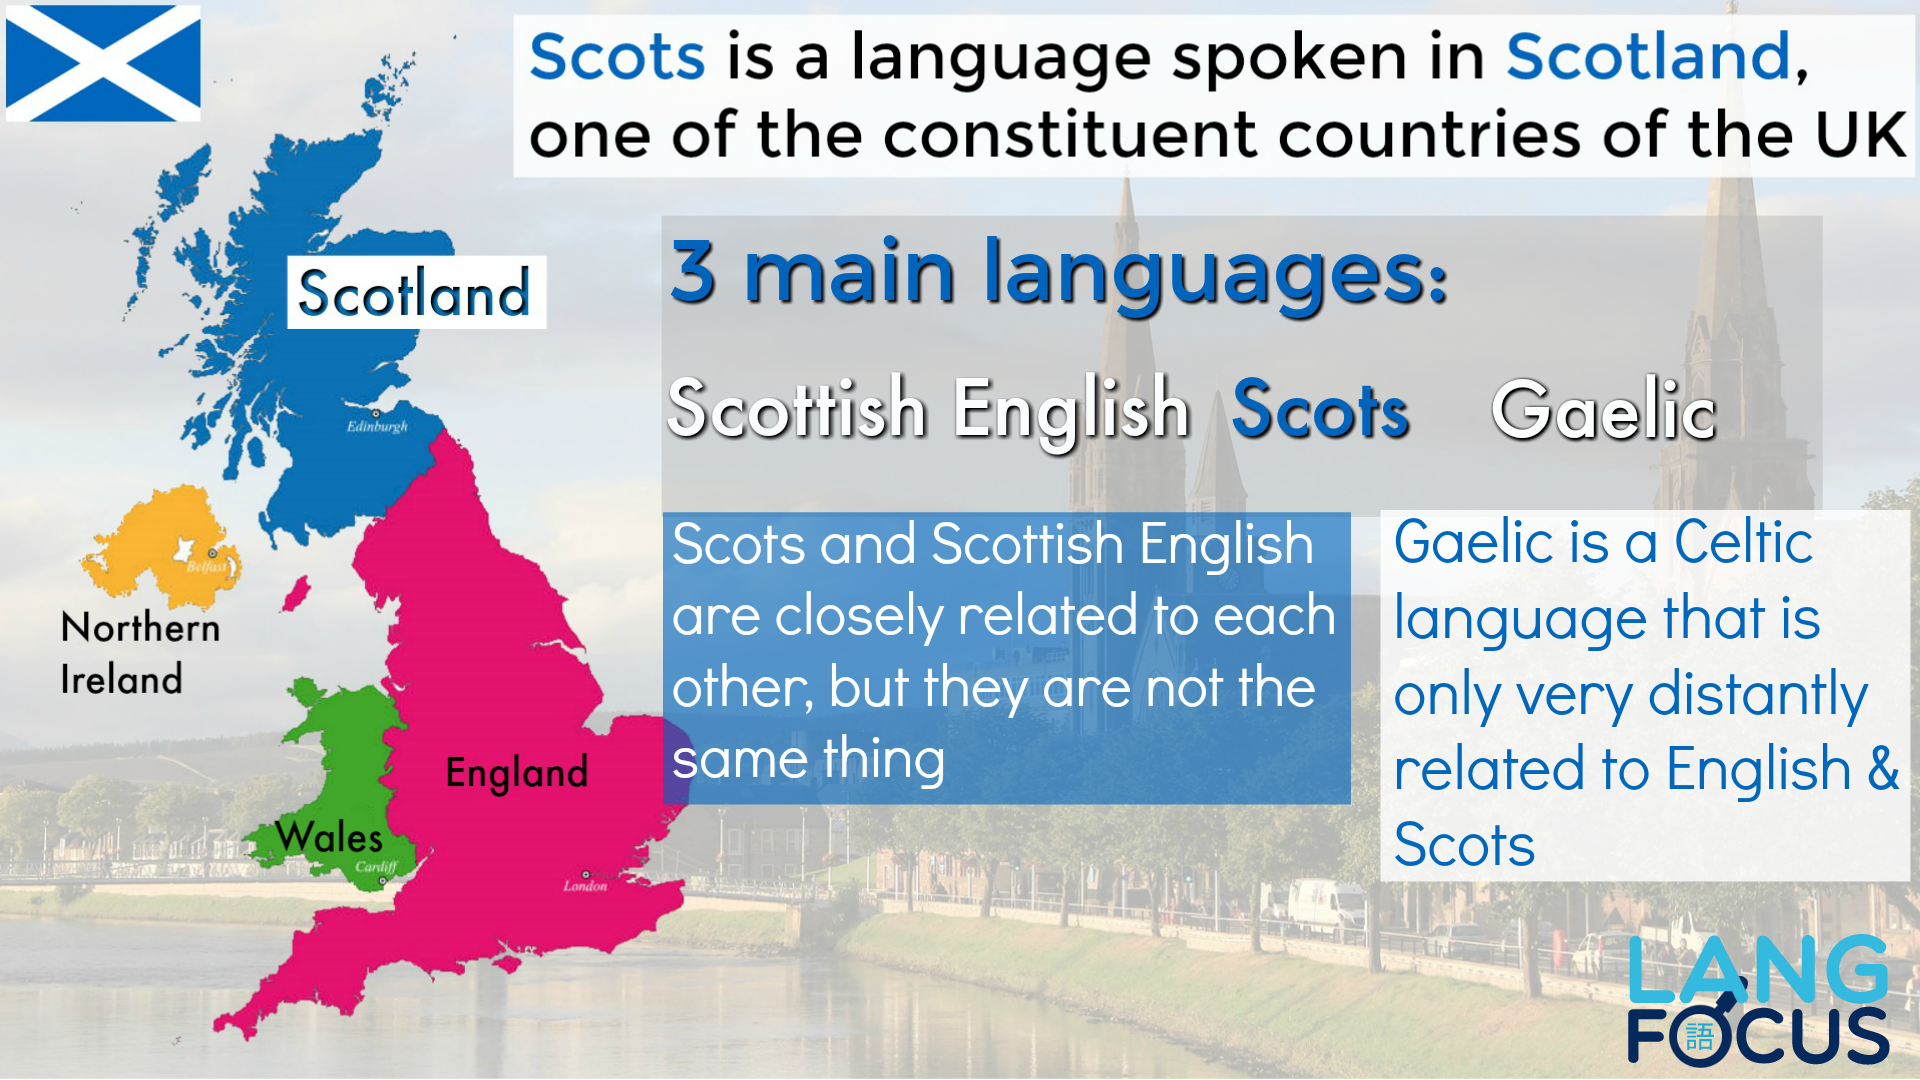 Spoken language перевод. Шотландский диалект английского языка. Scottish Gaelic language. Шотландия на английском языке. Scottish Accent of English.